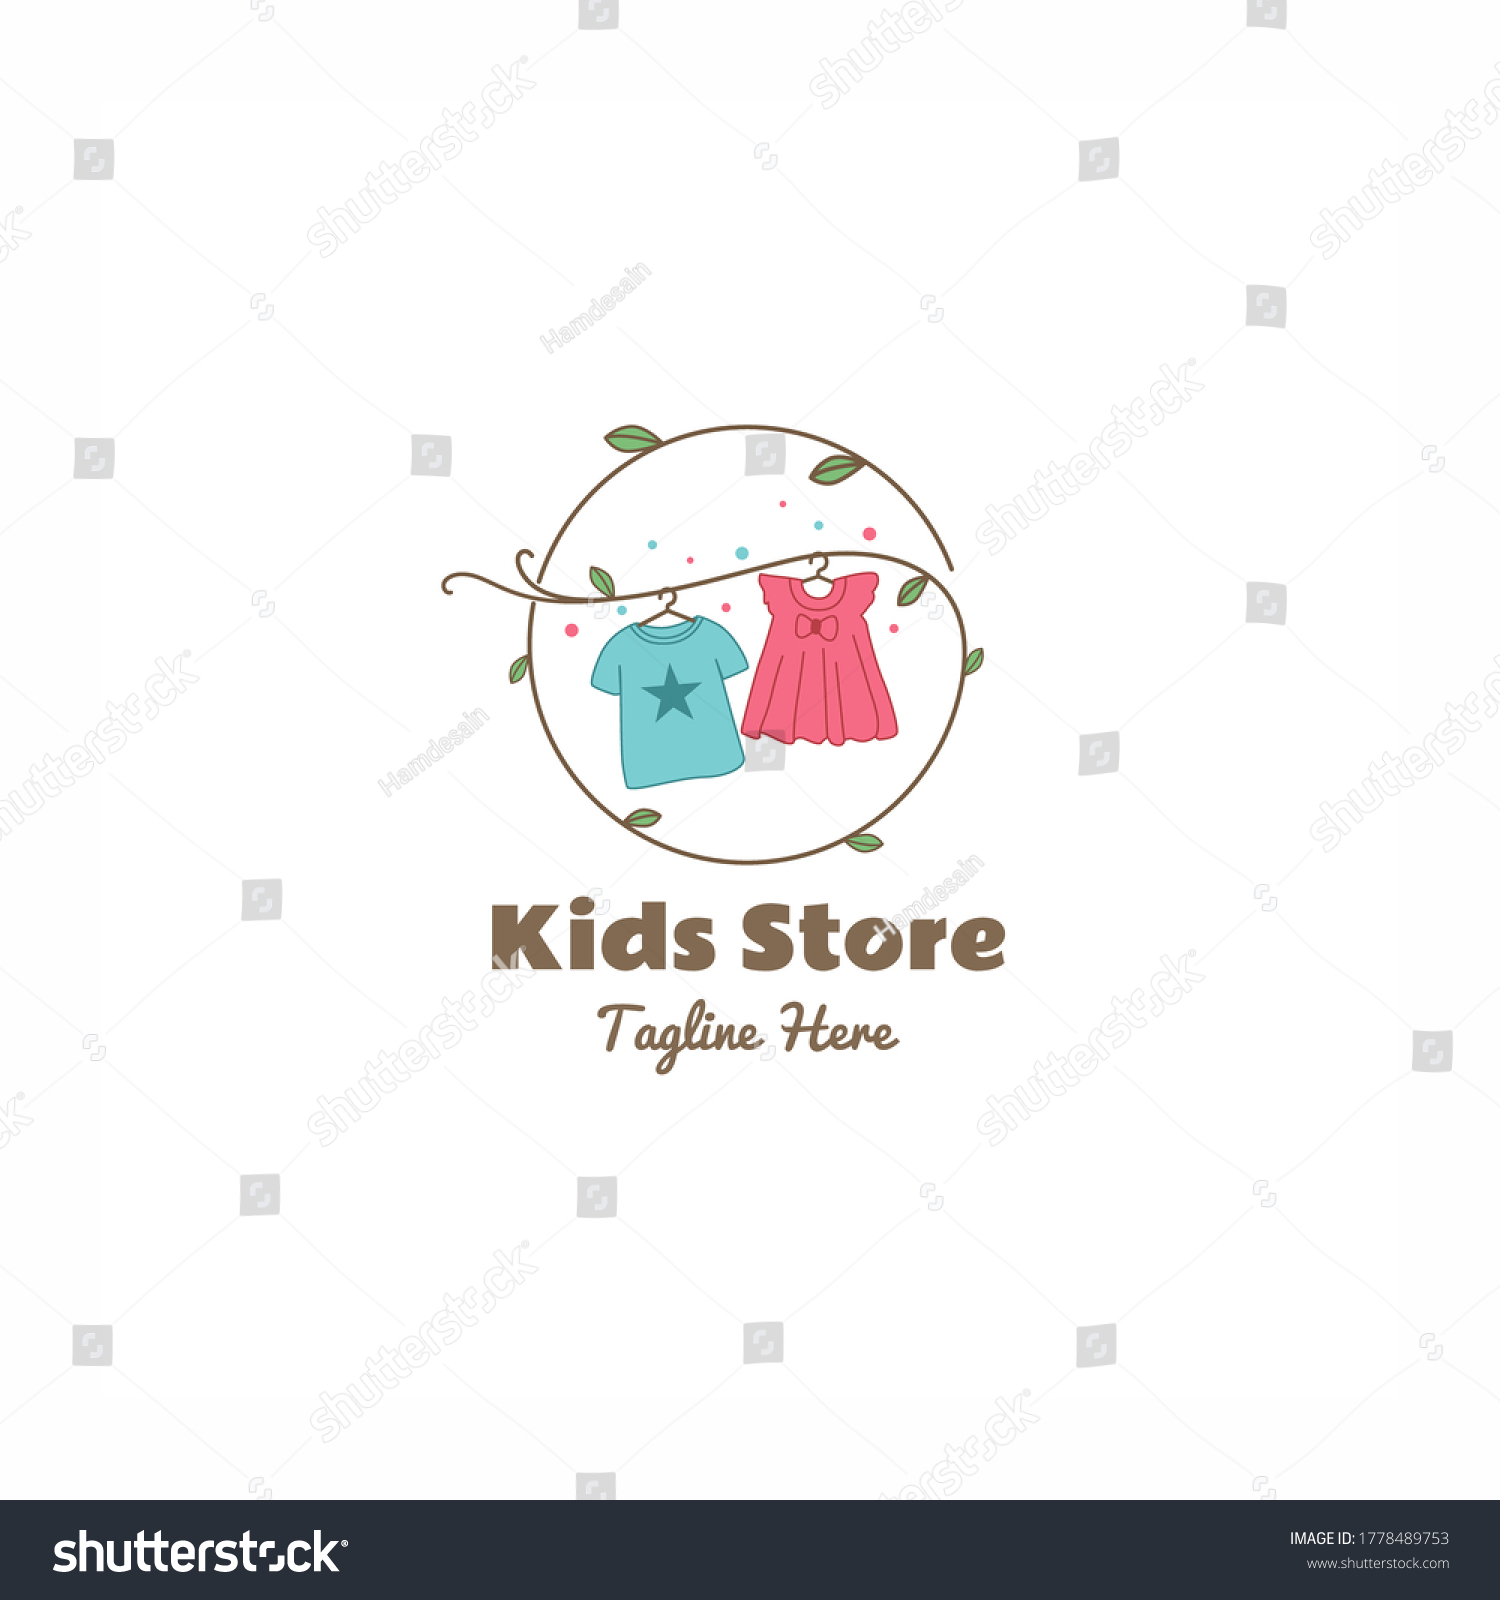 22,532 Kids logo clothing Images, Stock Photos & Vectors | Shutterstock